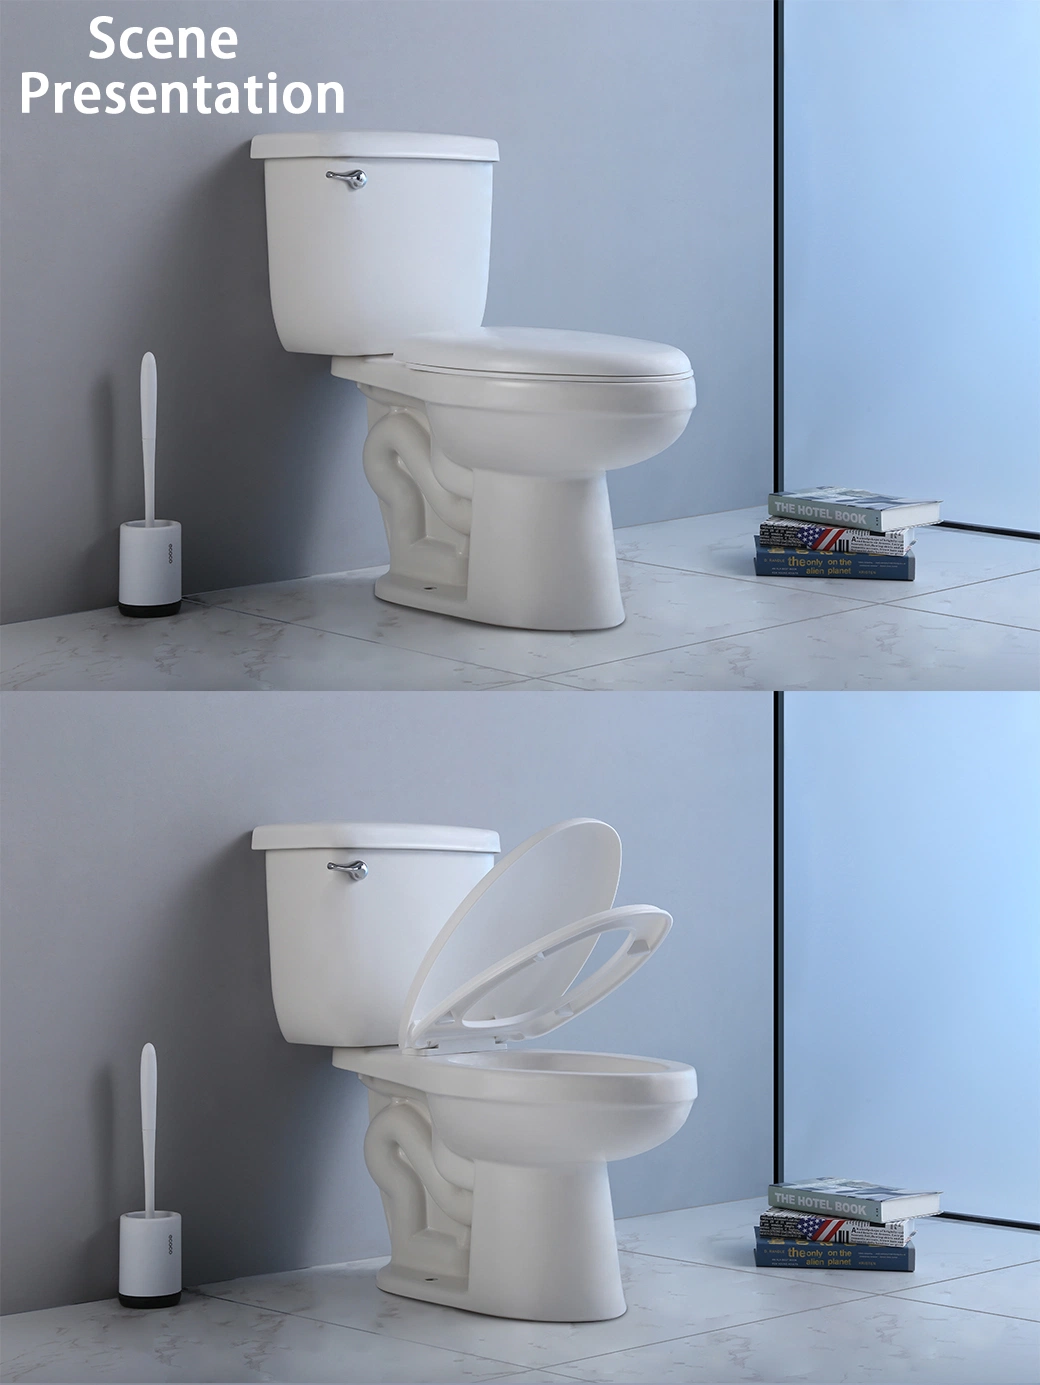 Bathroom Ceramic Siphon Flush Two Piece Wc Toilet with S-Trap White Bathroom Toilet Self-Clean Nano Water Closet Ceramic Toilet Discount